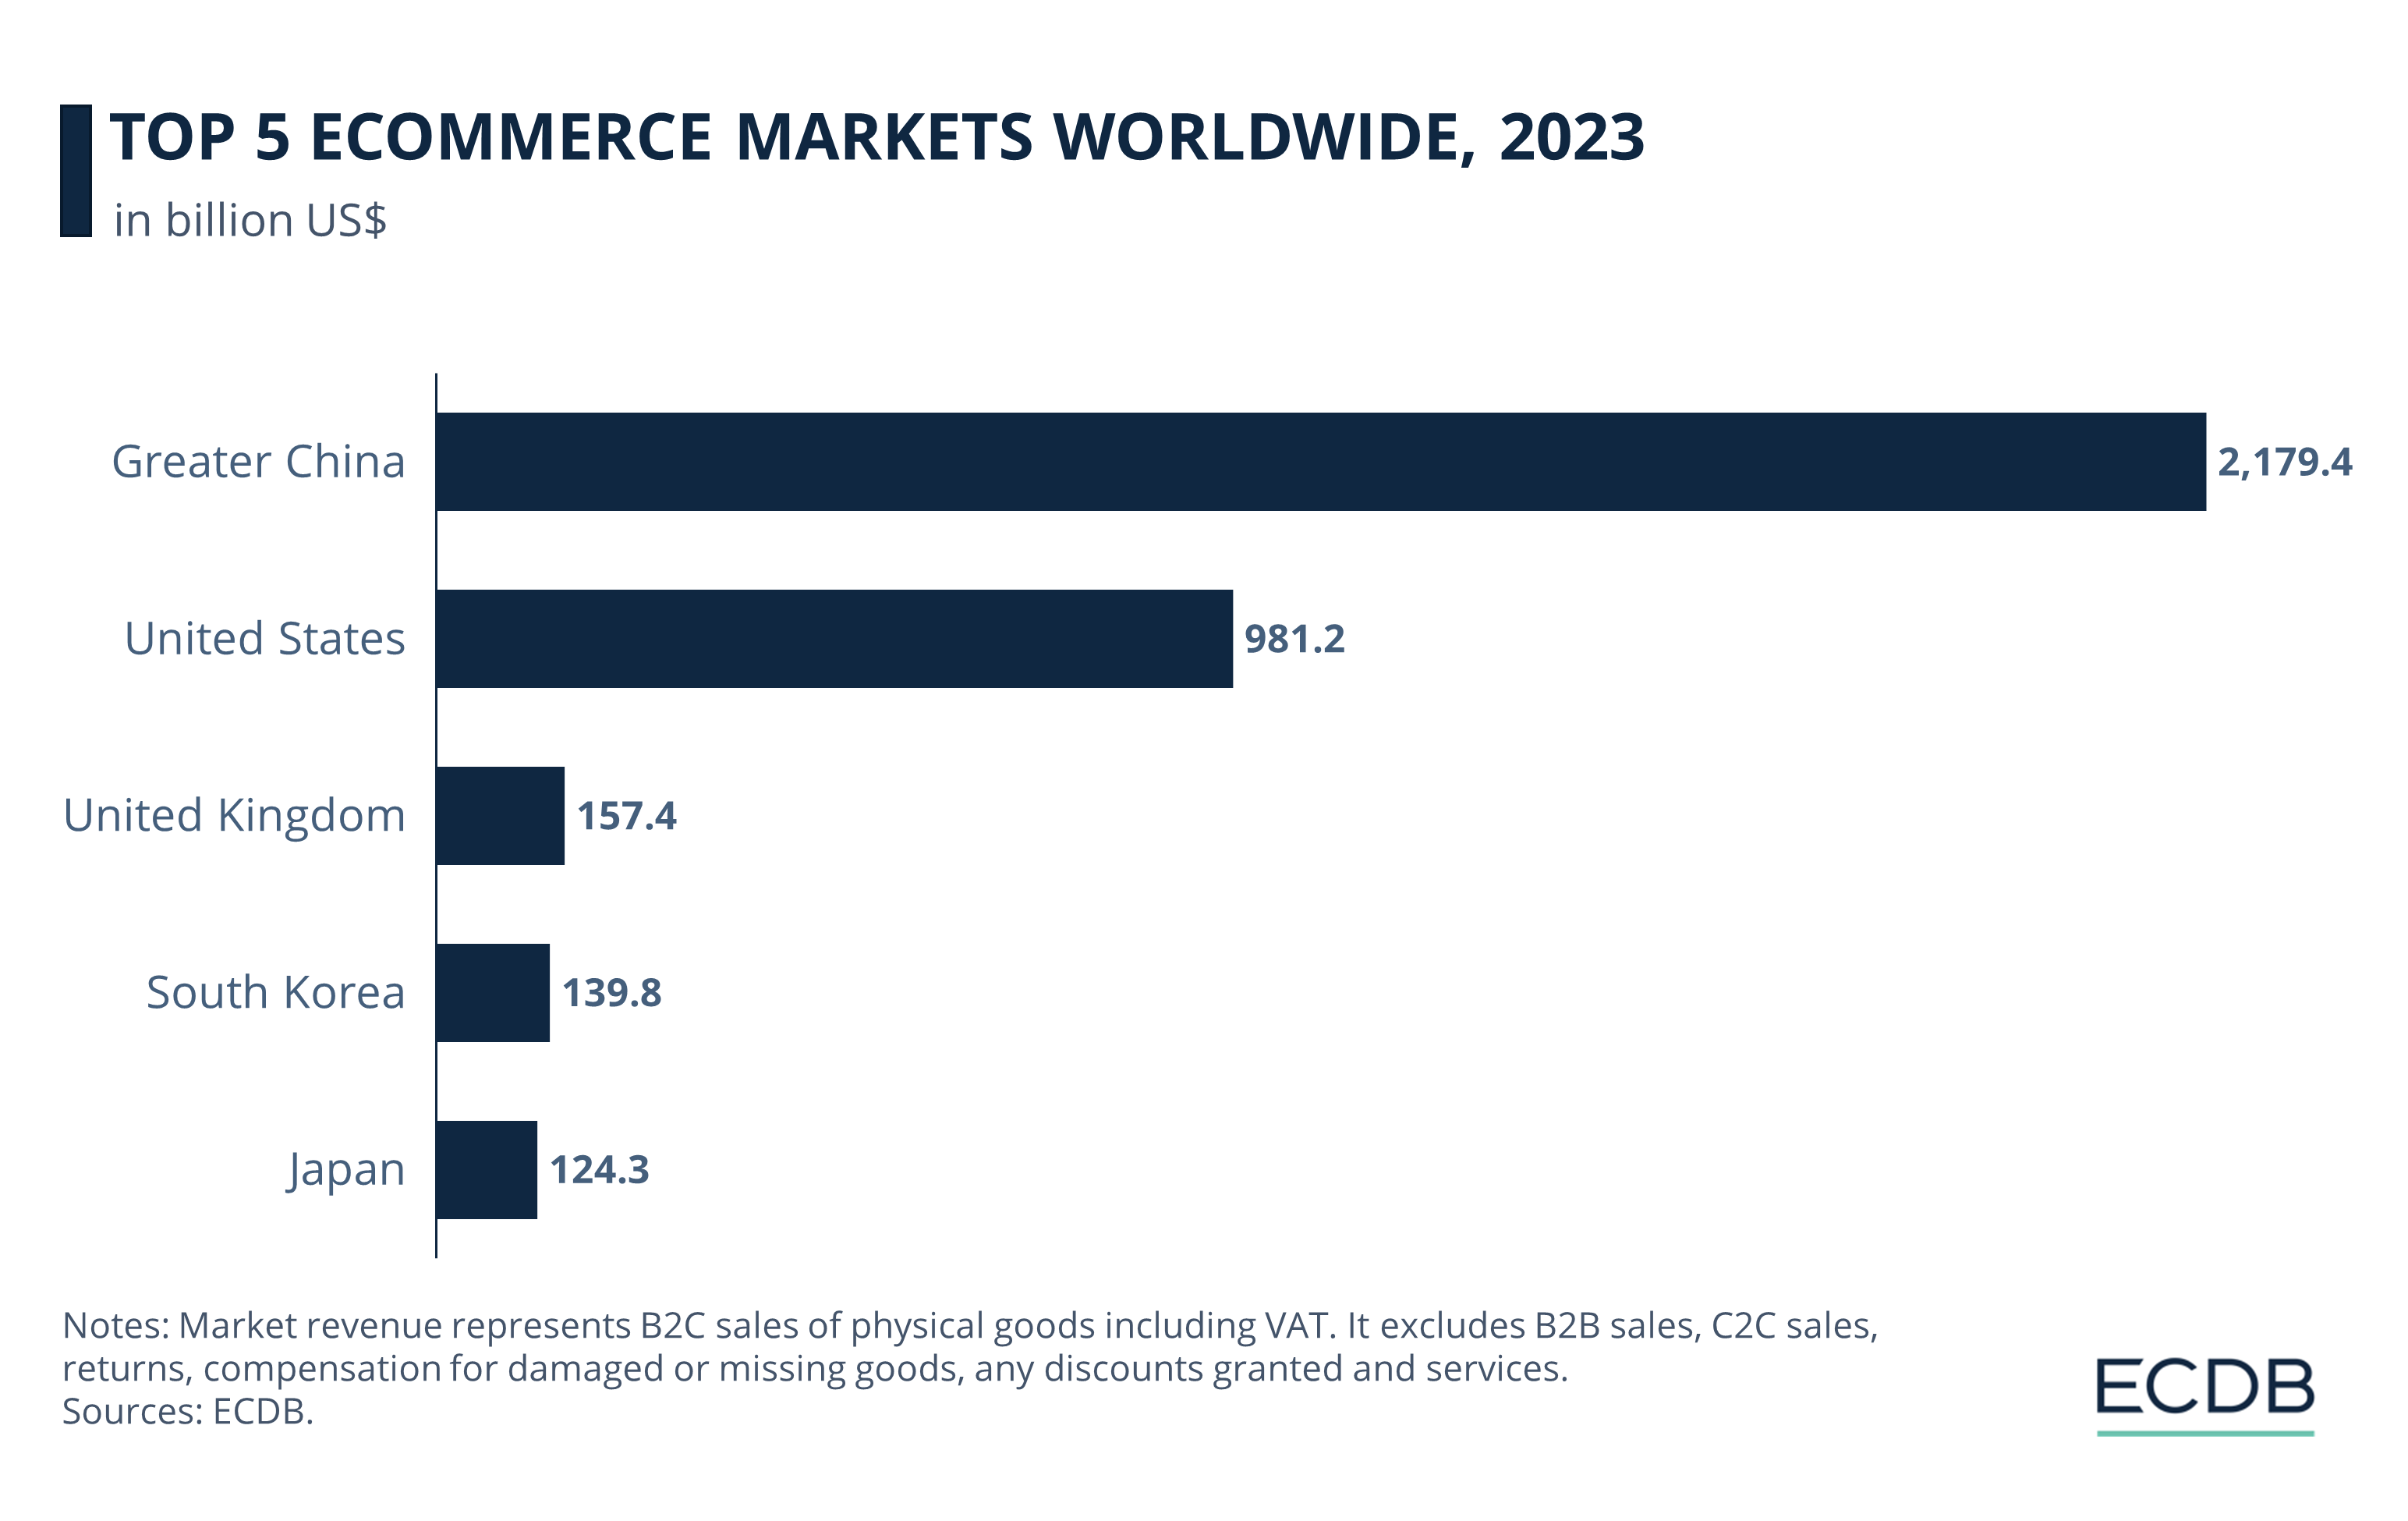 Top 5 eCommerce Markets Worldwide, 2023